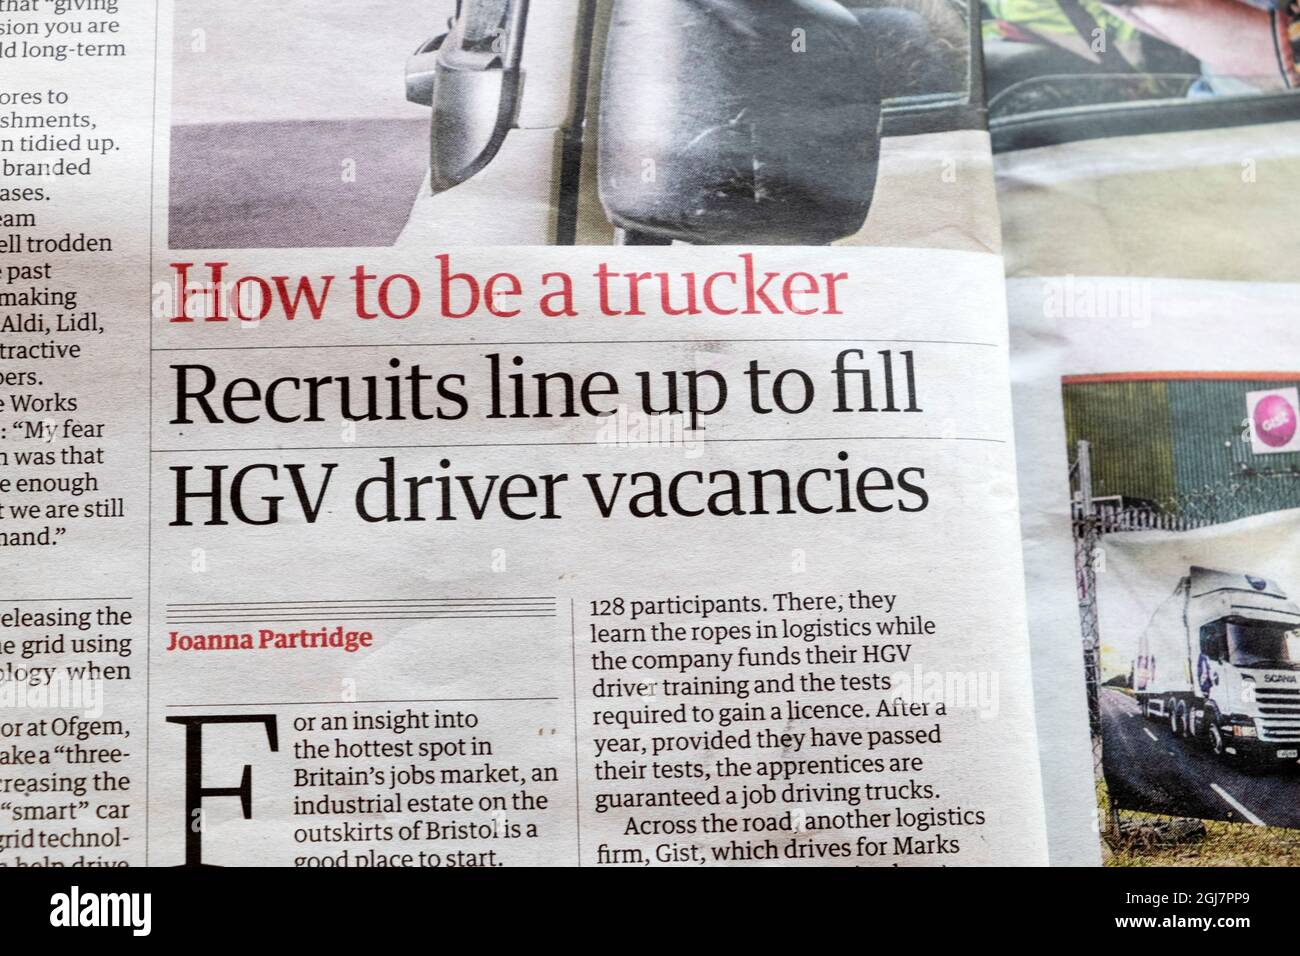 'Reclute line up to fill HGV driver vacancies' trucker job articolo in Guardian Inside page giornale headline 2 settembre 2021 Londra Inghilterra UK Foto Stock